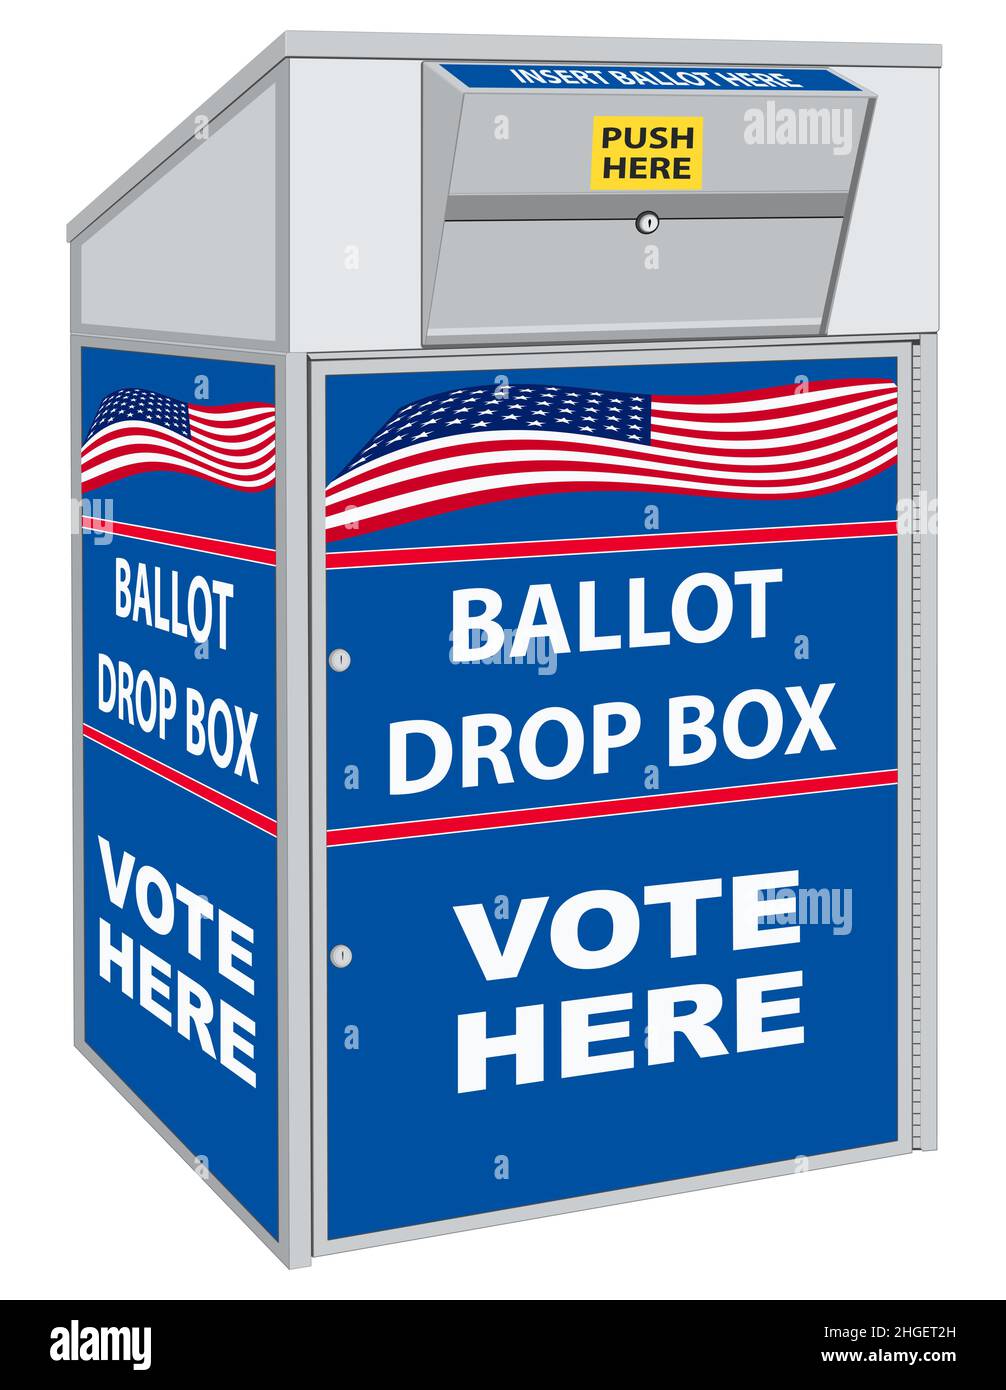 USA Ballot Drop Box, Vote Here, container - Vector Illustration Stock Vector